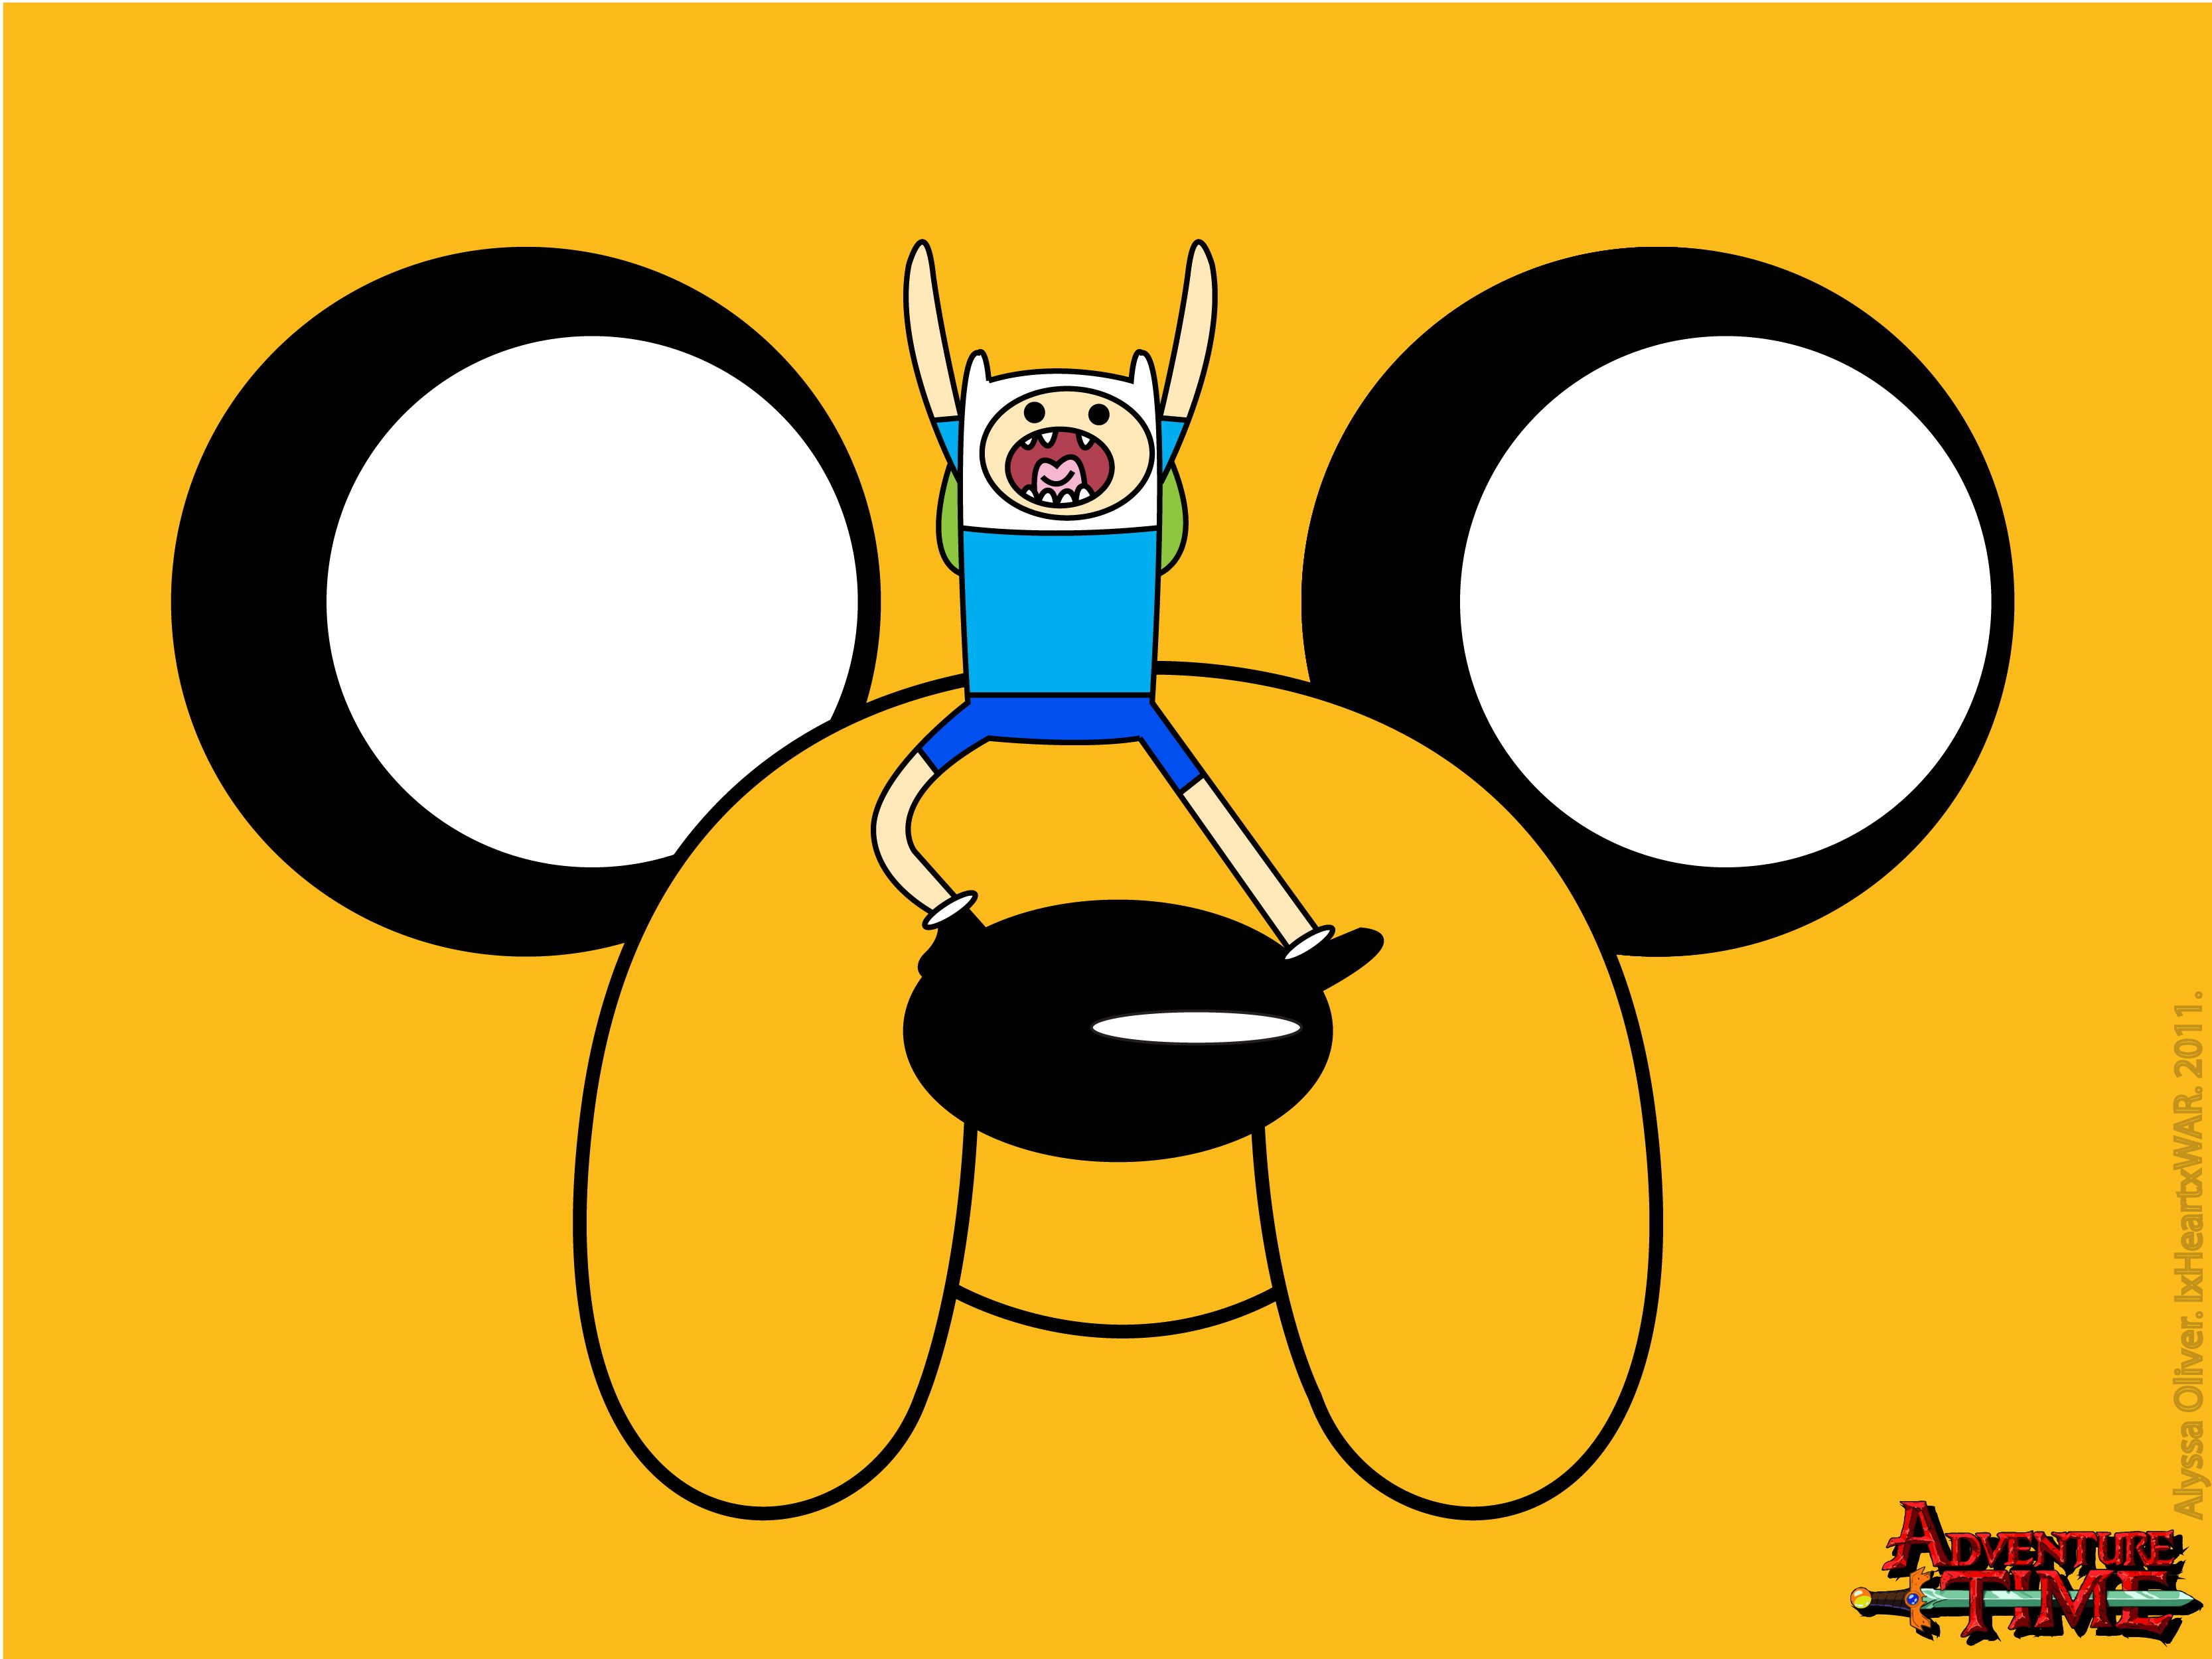 Adventure Time Wallpaper 2 by allenamin on DeviantArt